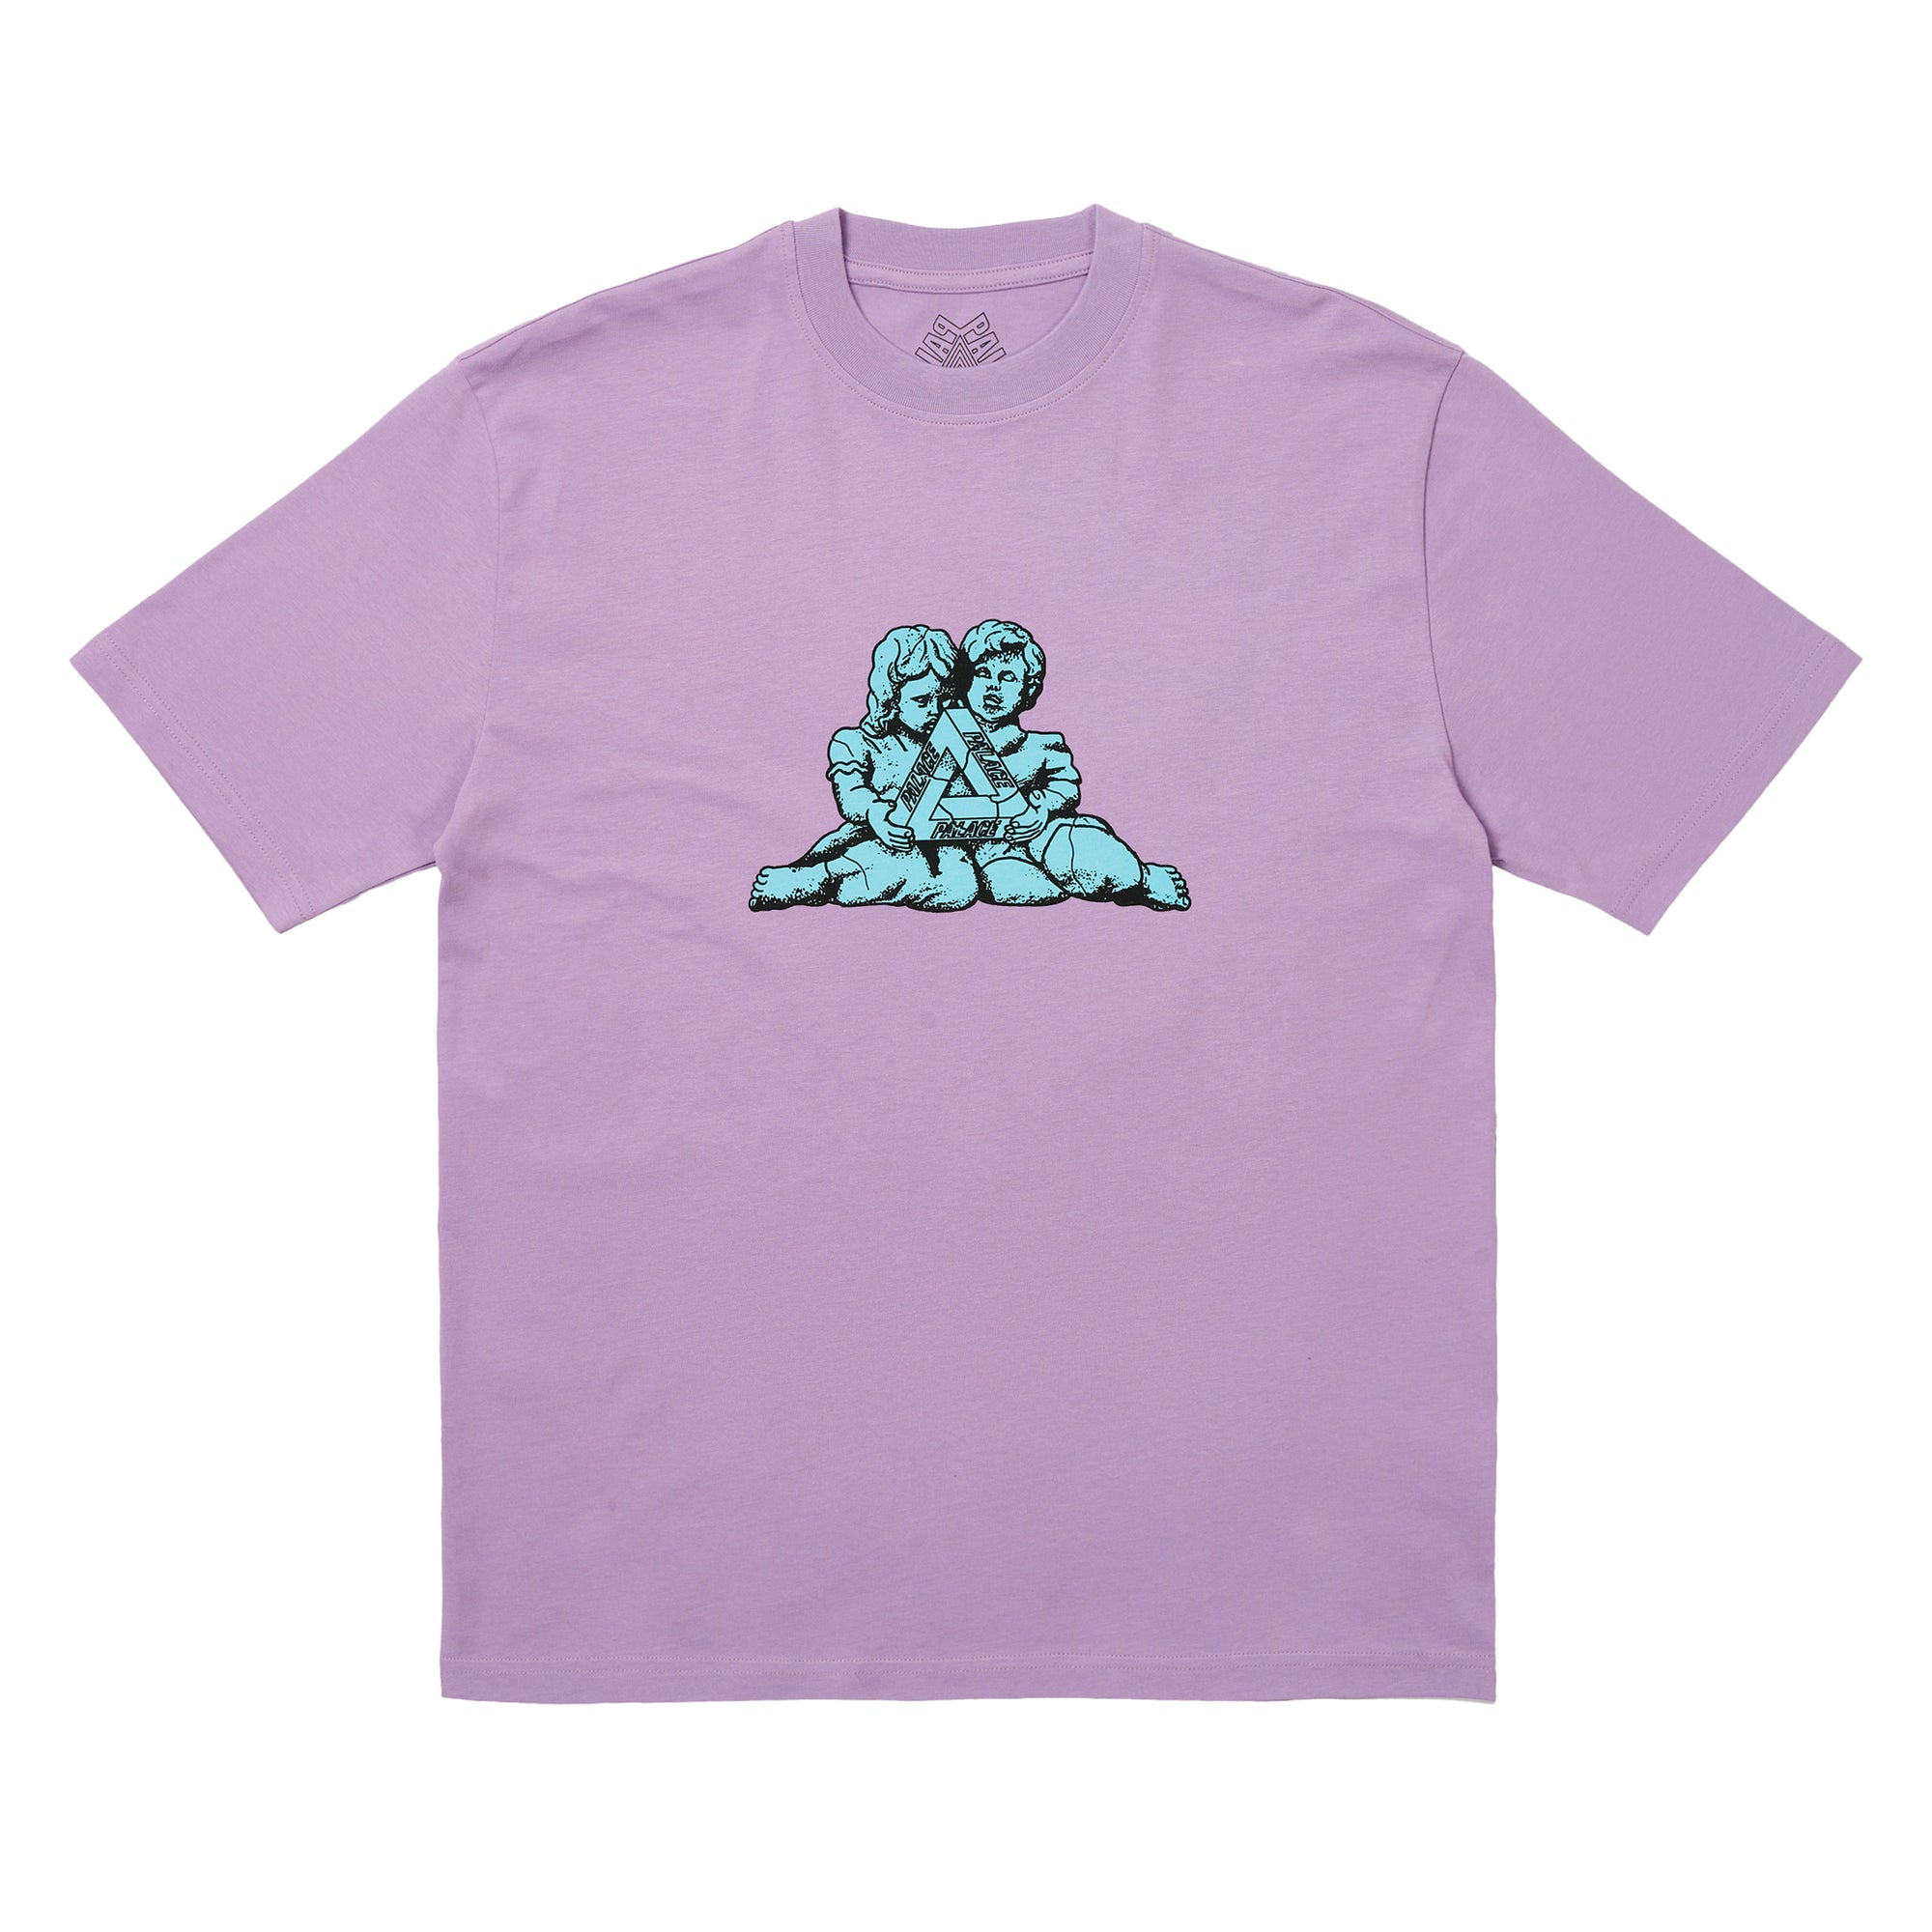 Palace - Men’s Chiseled T-Shirt - (Light Purple) view 1